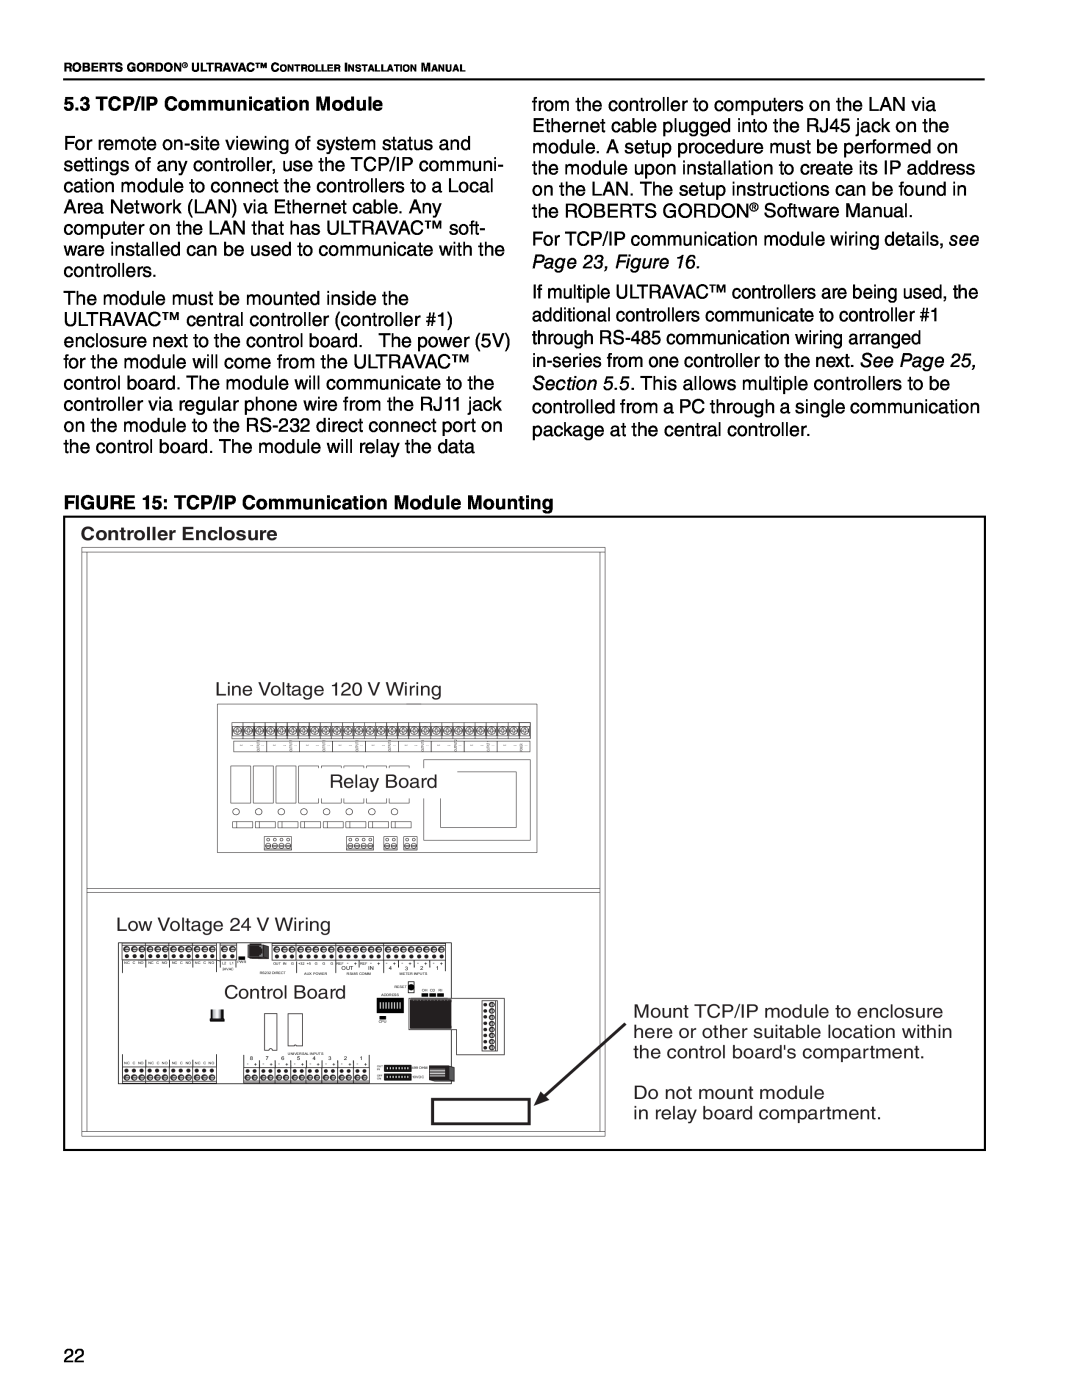 Roberts Gorden NEMA 4 installation manual 5.3 TCP/IP Communication Module, TCP/IP Communication Module Mounting 